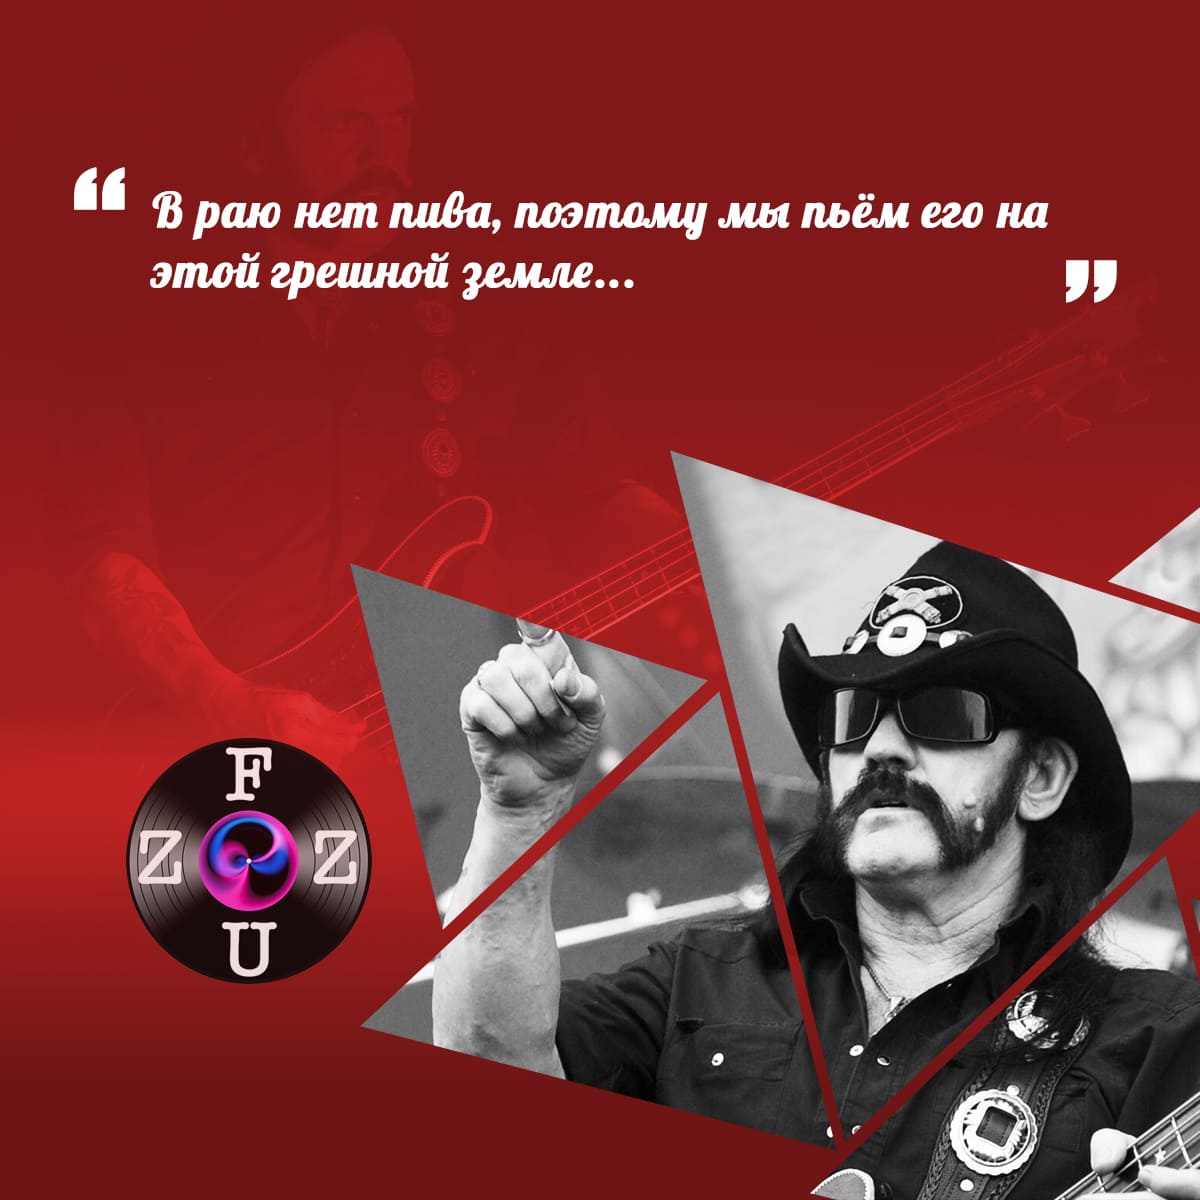 Lemmy Kilmister Quotes.